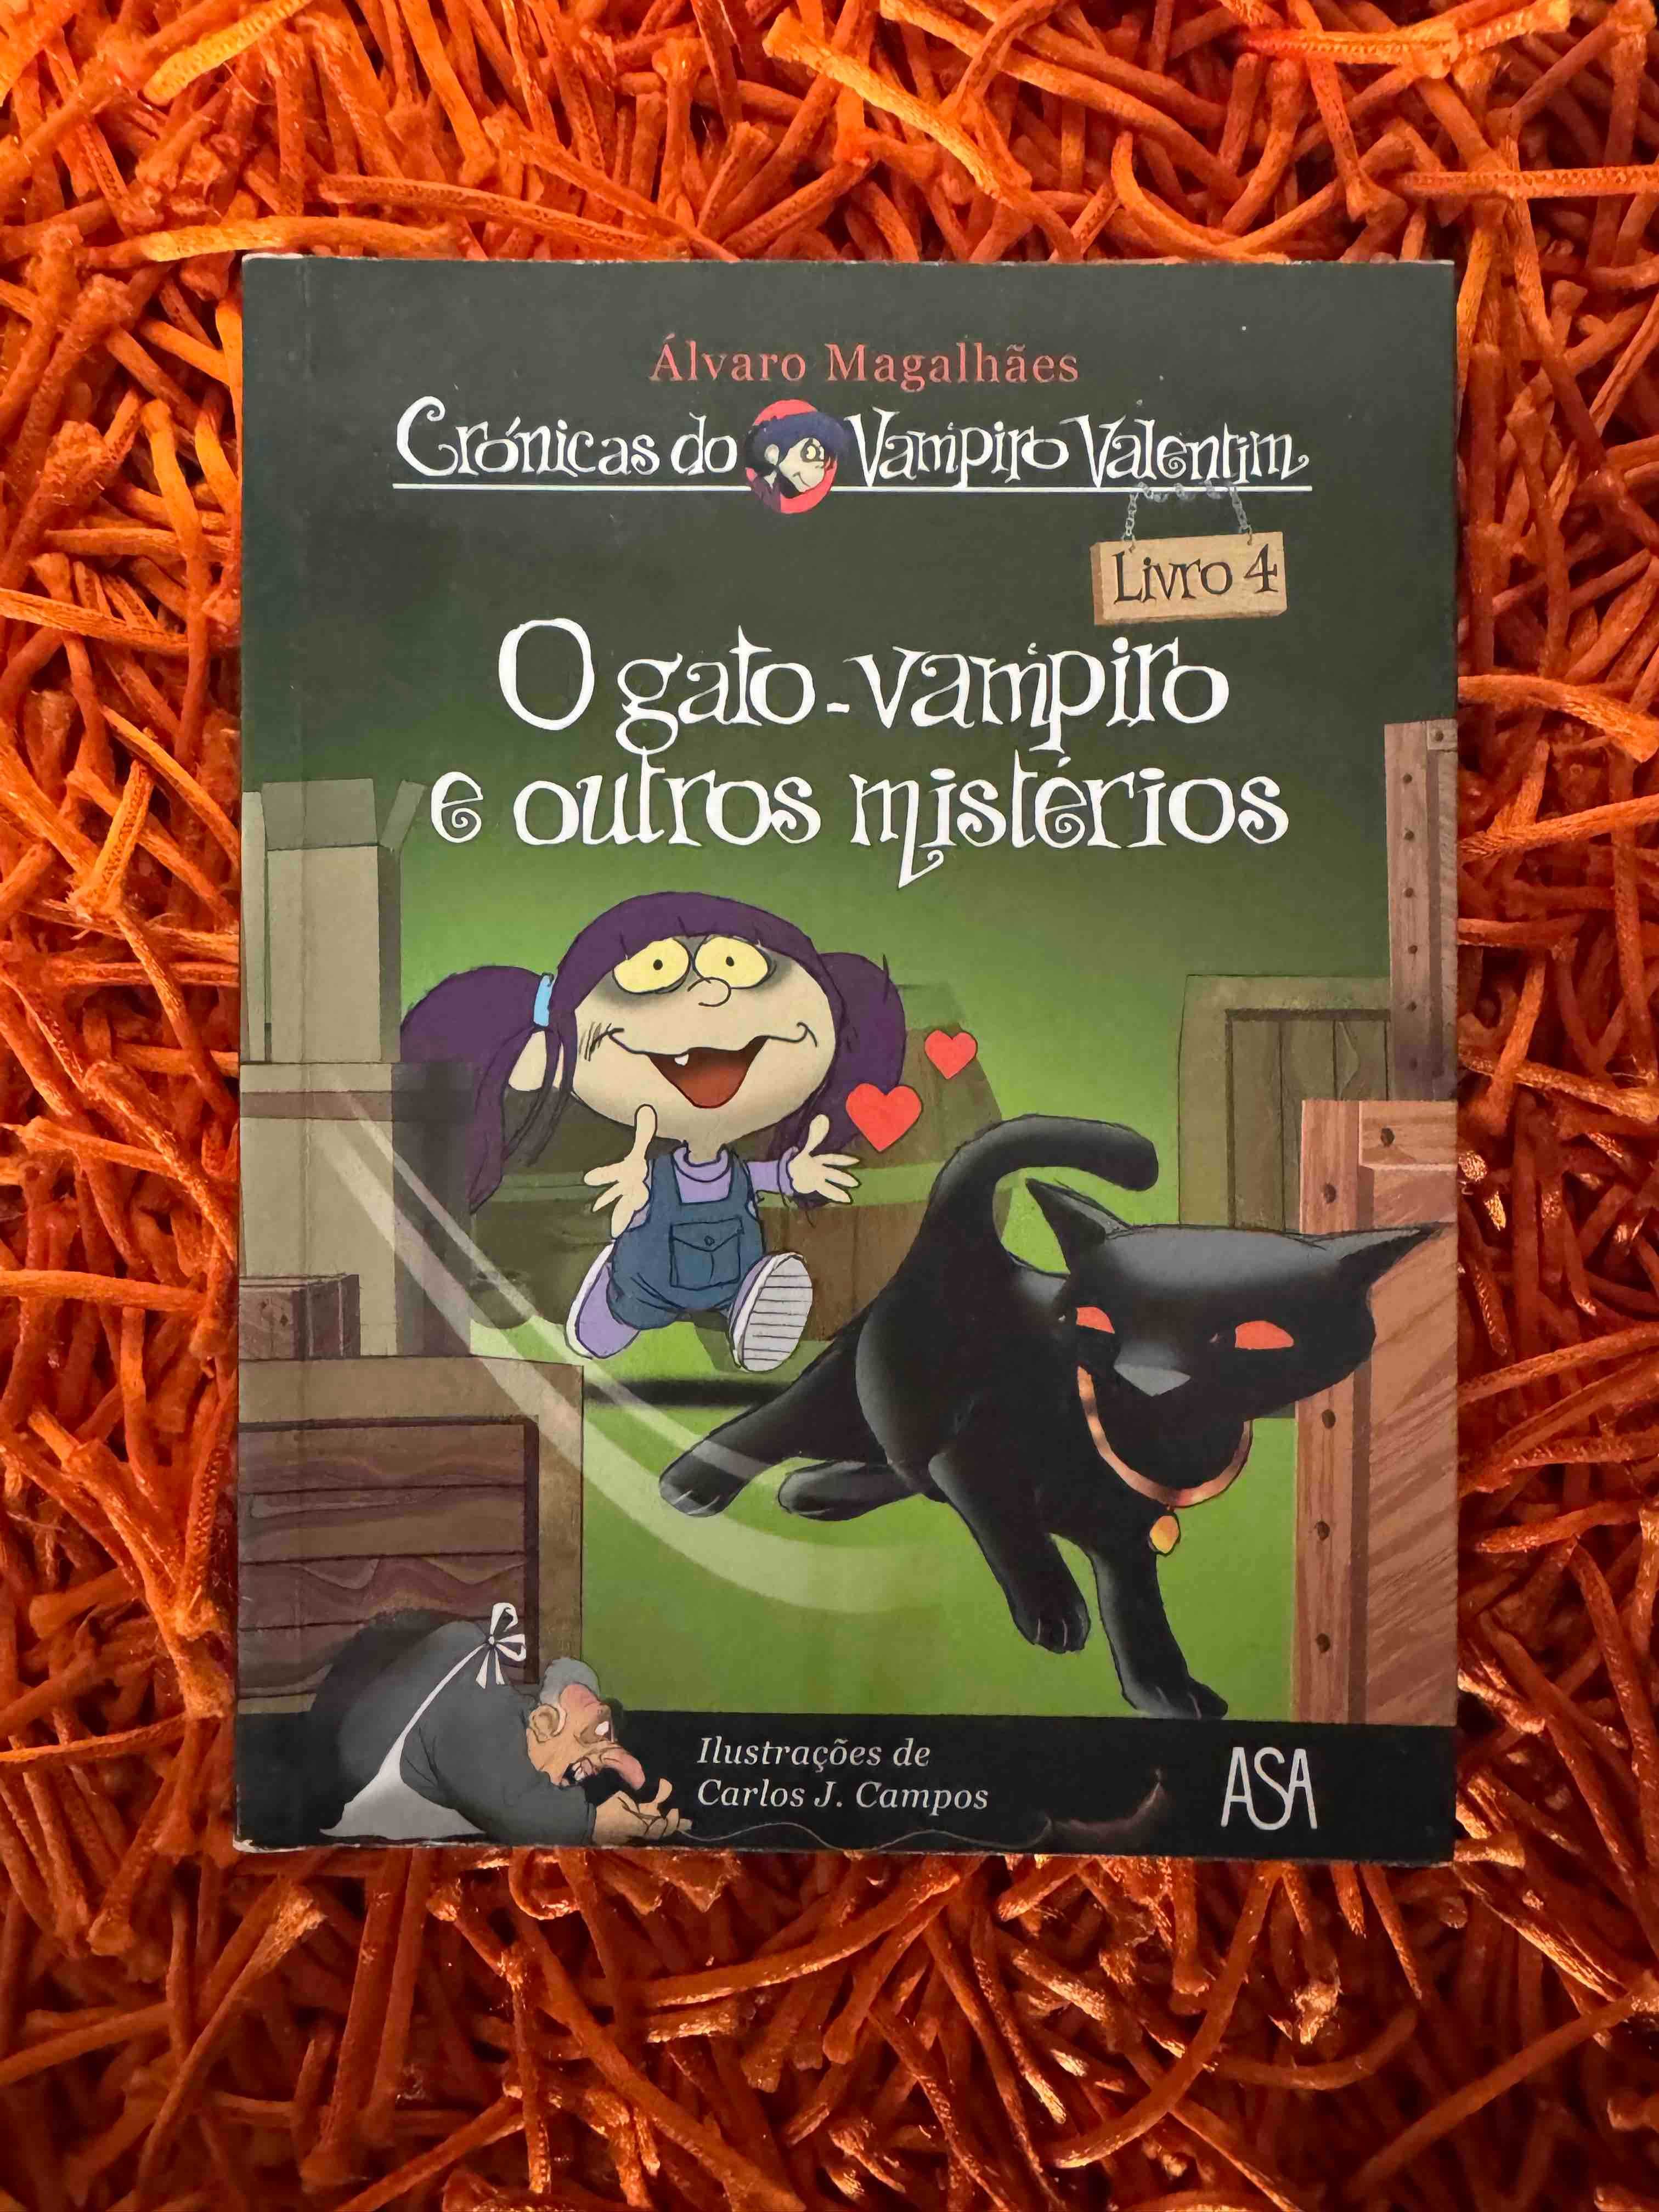 O gato-vampiro e outros mistérios - Livro 4